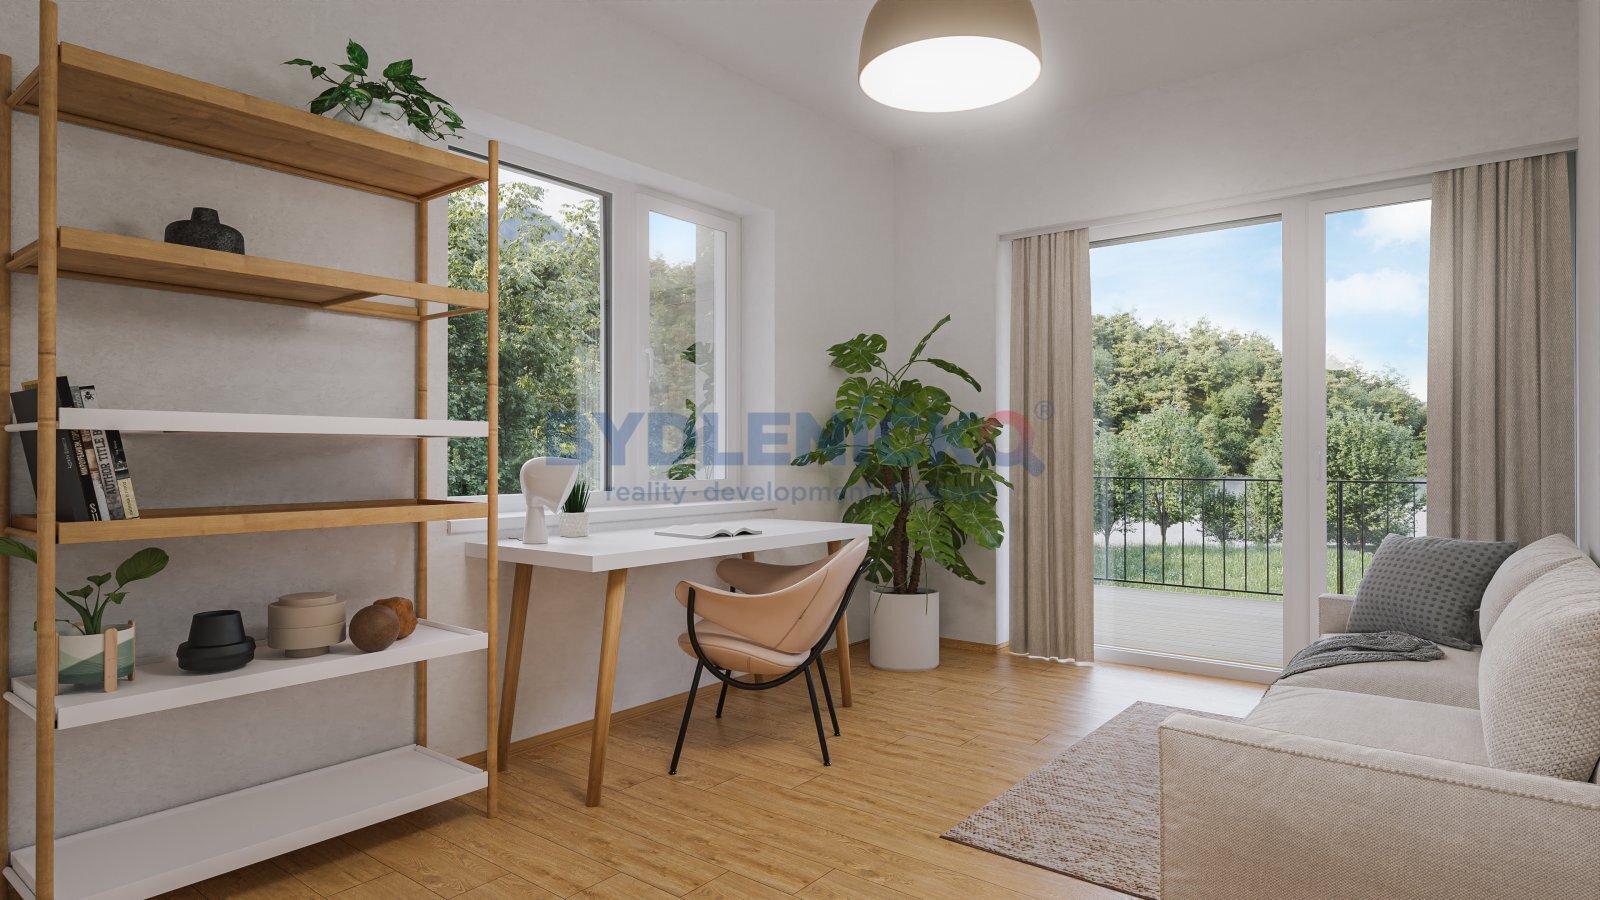 Prodej bytu 1+kk s balkonem, 42 m2, Hluboká nad Vl